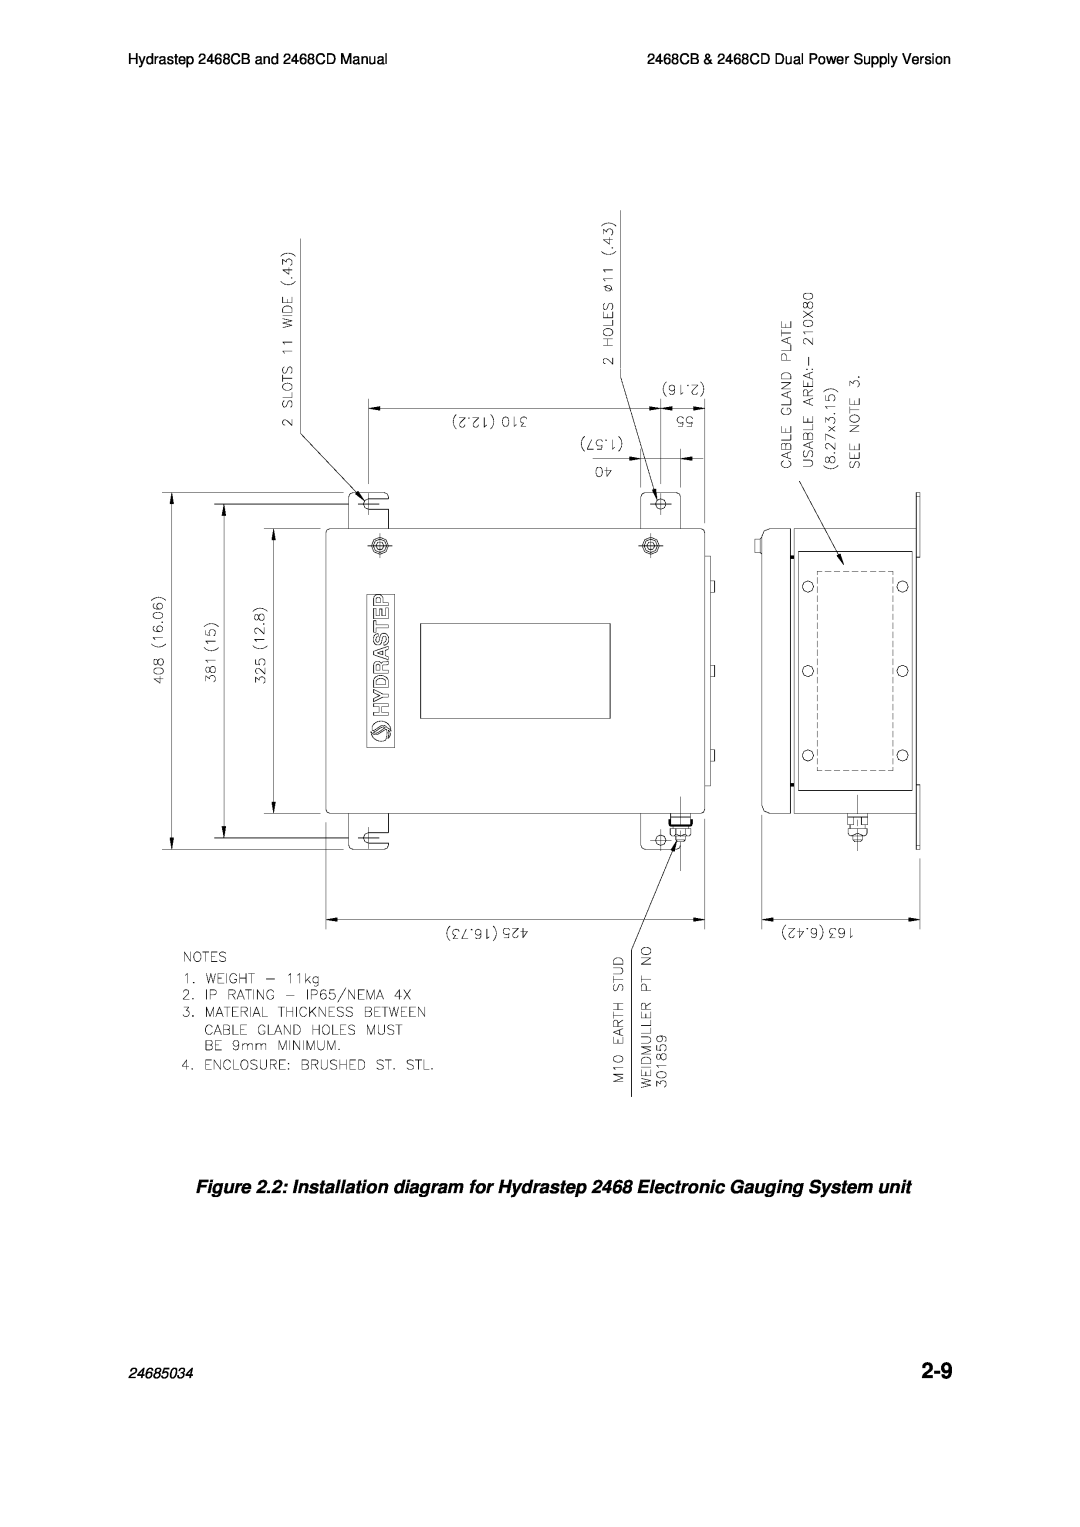 Emerson manual Hydrastep 2468CB and 2468CD Manual, 24685034 